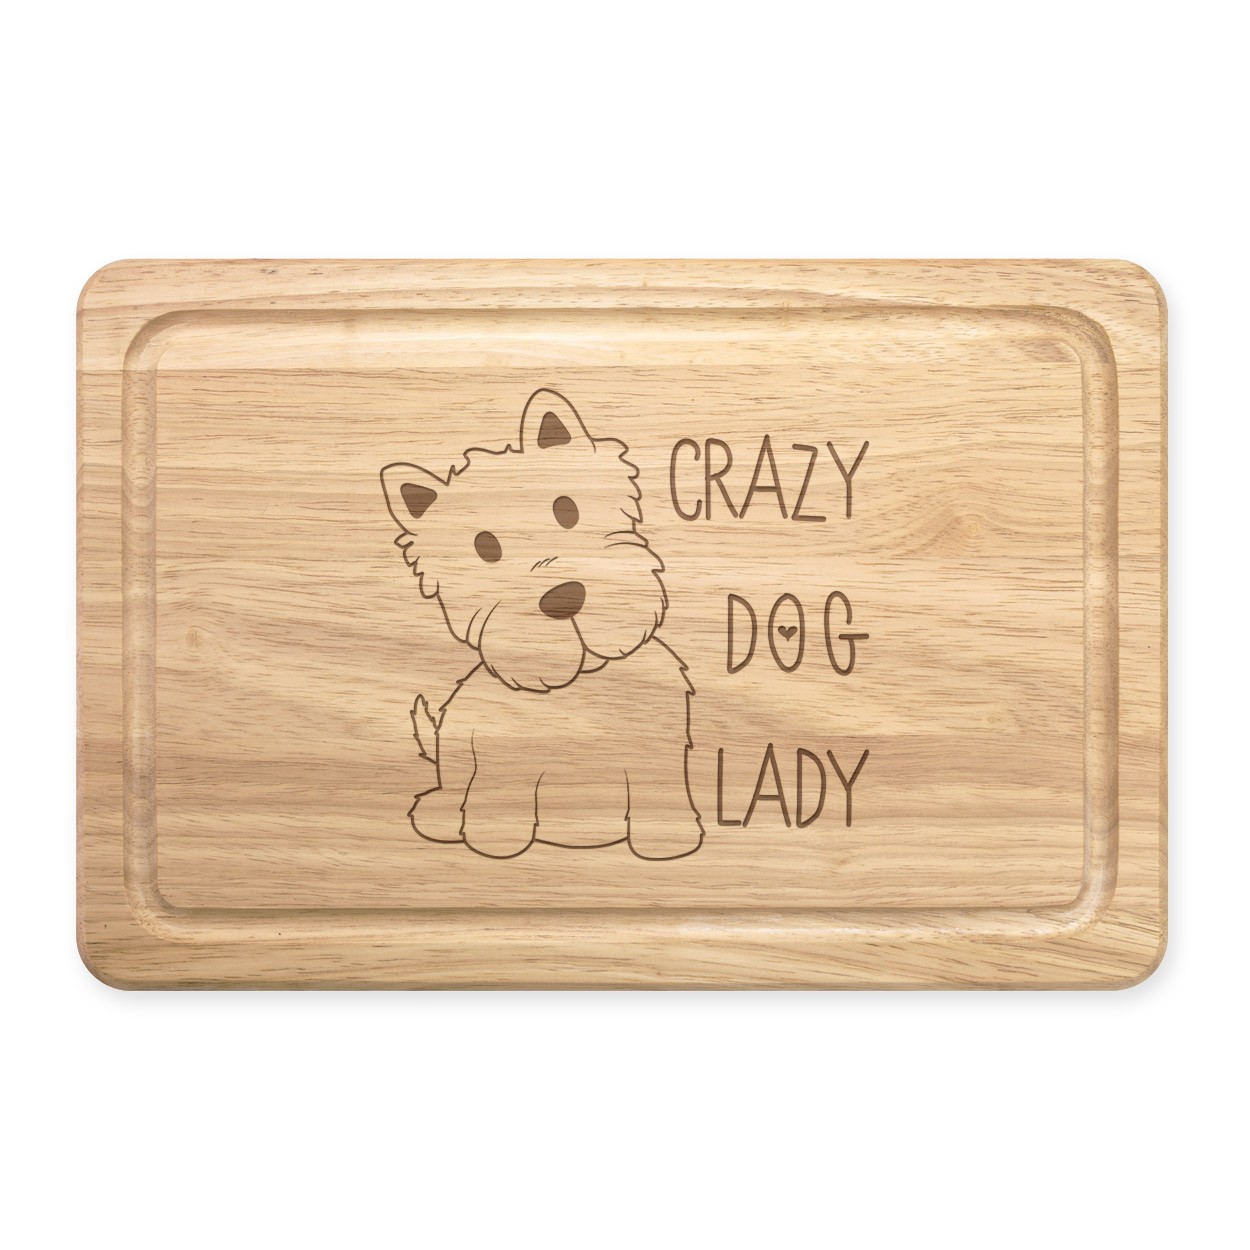 Crazy Dog Lady Rectangular Wooden Chopping Board